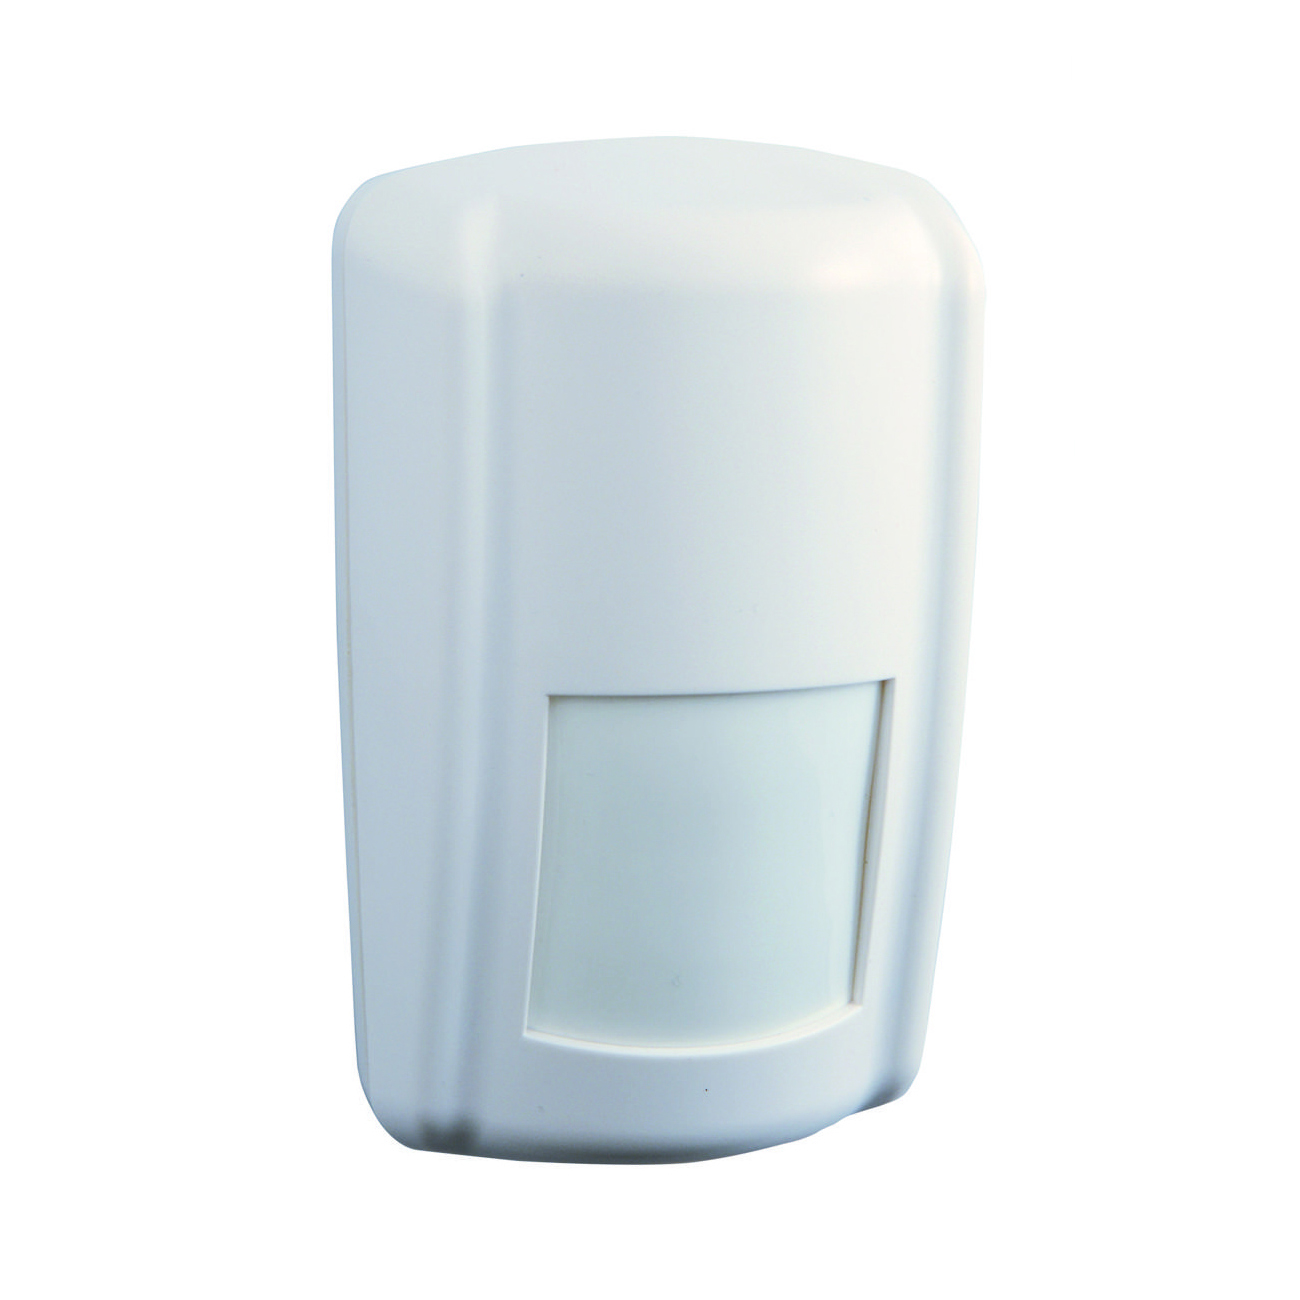 Infrarosso passivo standard urmet 1059/101 per antifurto wireless bianco